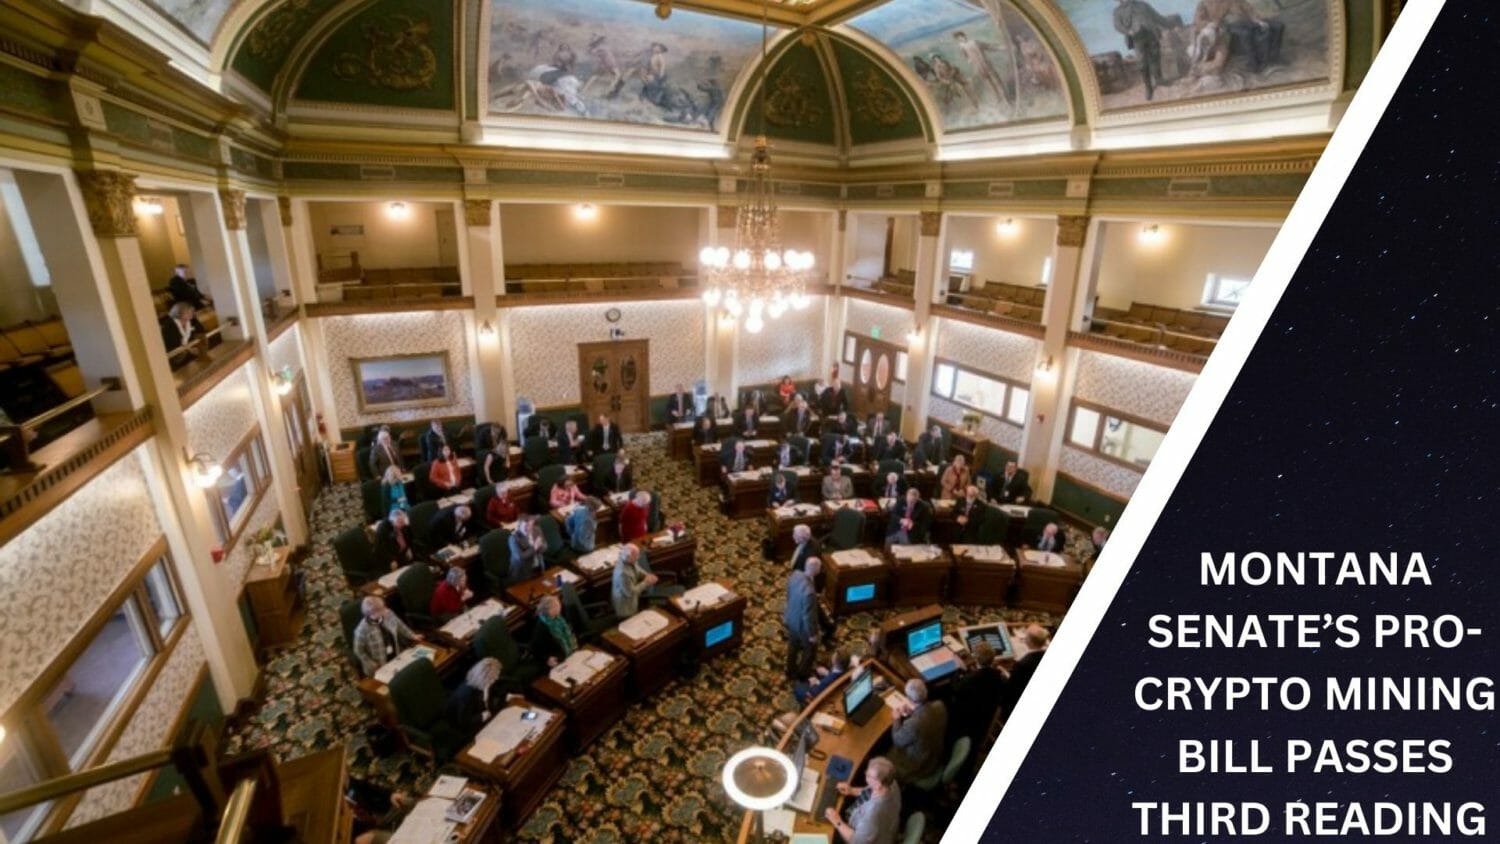 Montana Senate’s Pro-Crypto Mining Bill Passes Third Reading